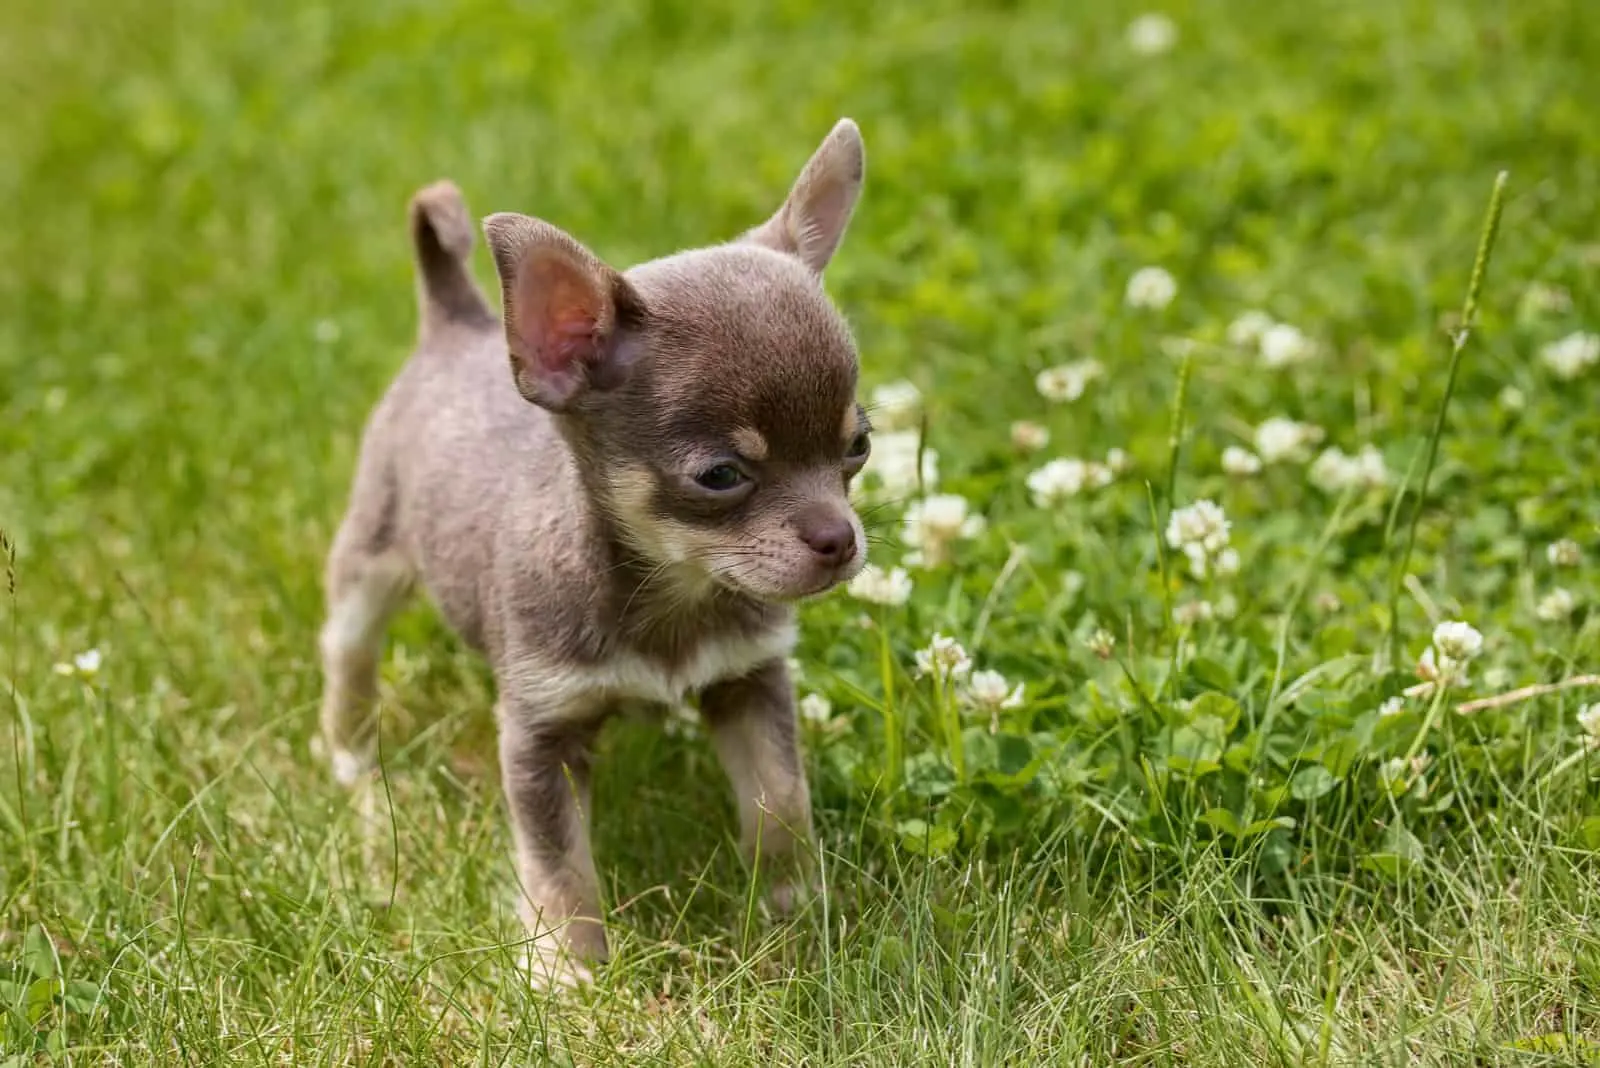 Chihuahua walking on grass outside